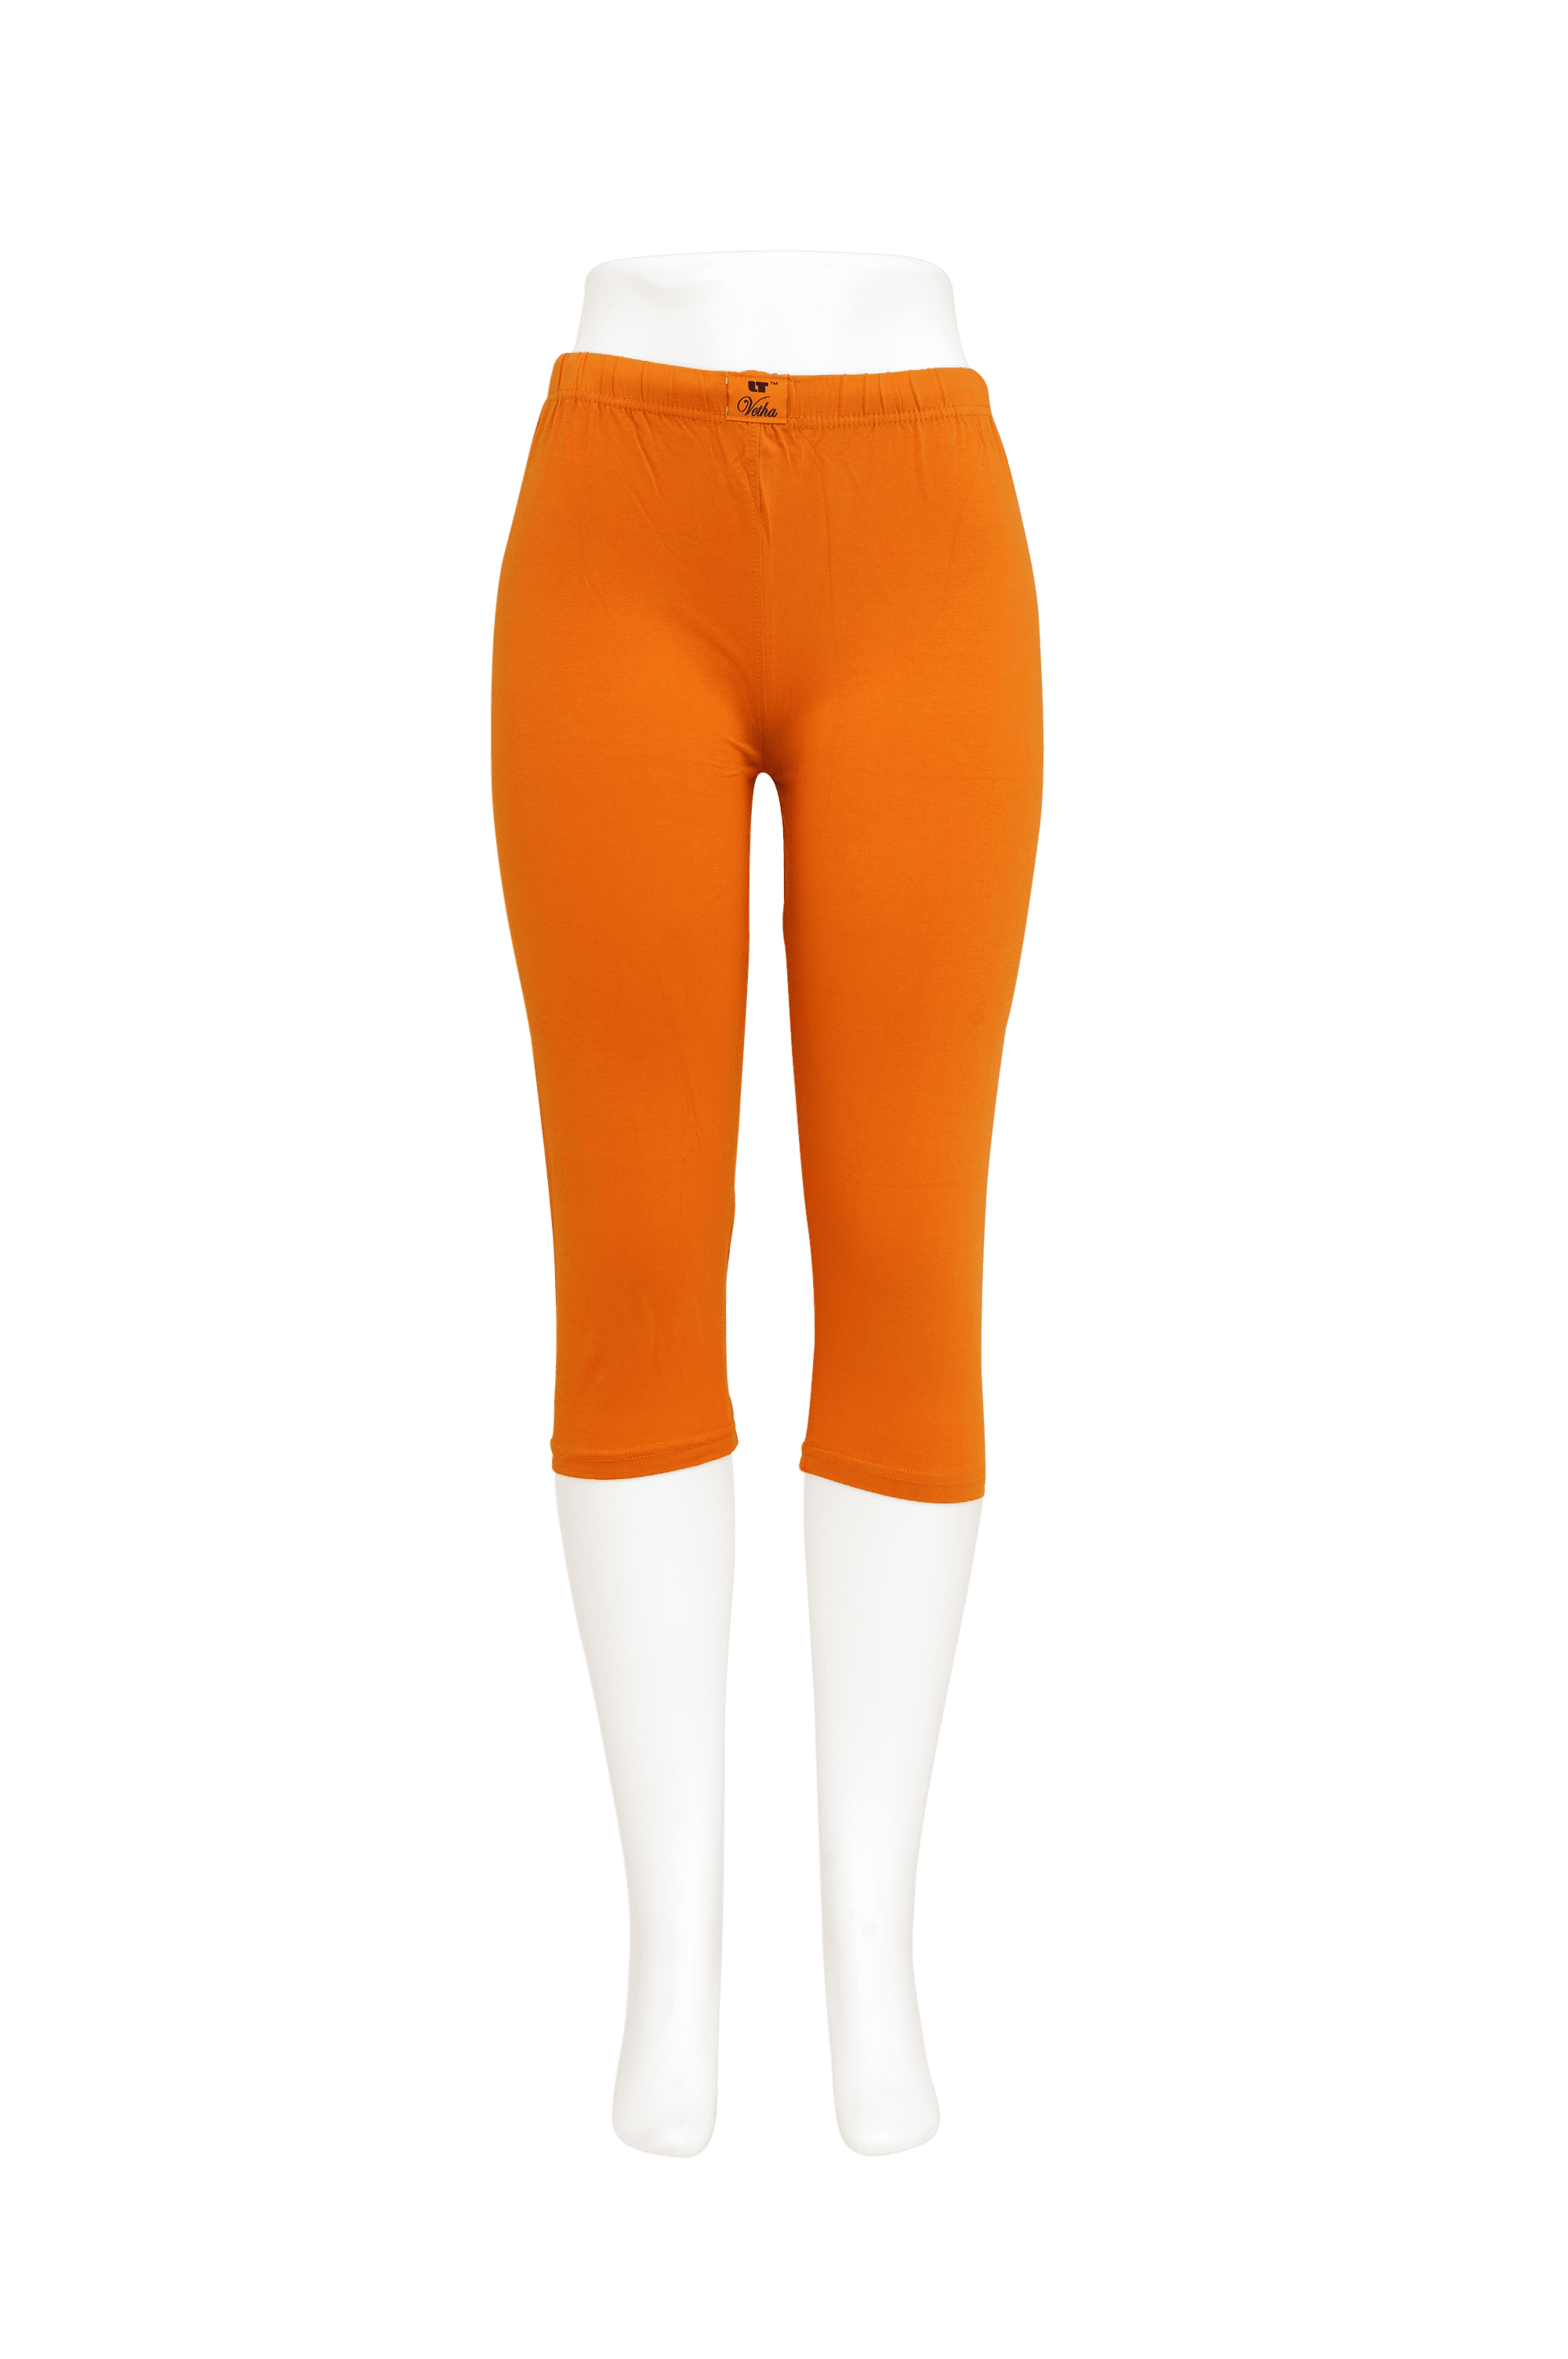 PULLIMORE Womens High Waisted Yoga Capri Pants Tie Dye Butt Lifting Leggings  Tummy Control Slimming Textured Booty Leggings (M, Yellow) - Walmart.com